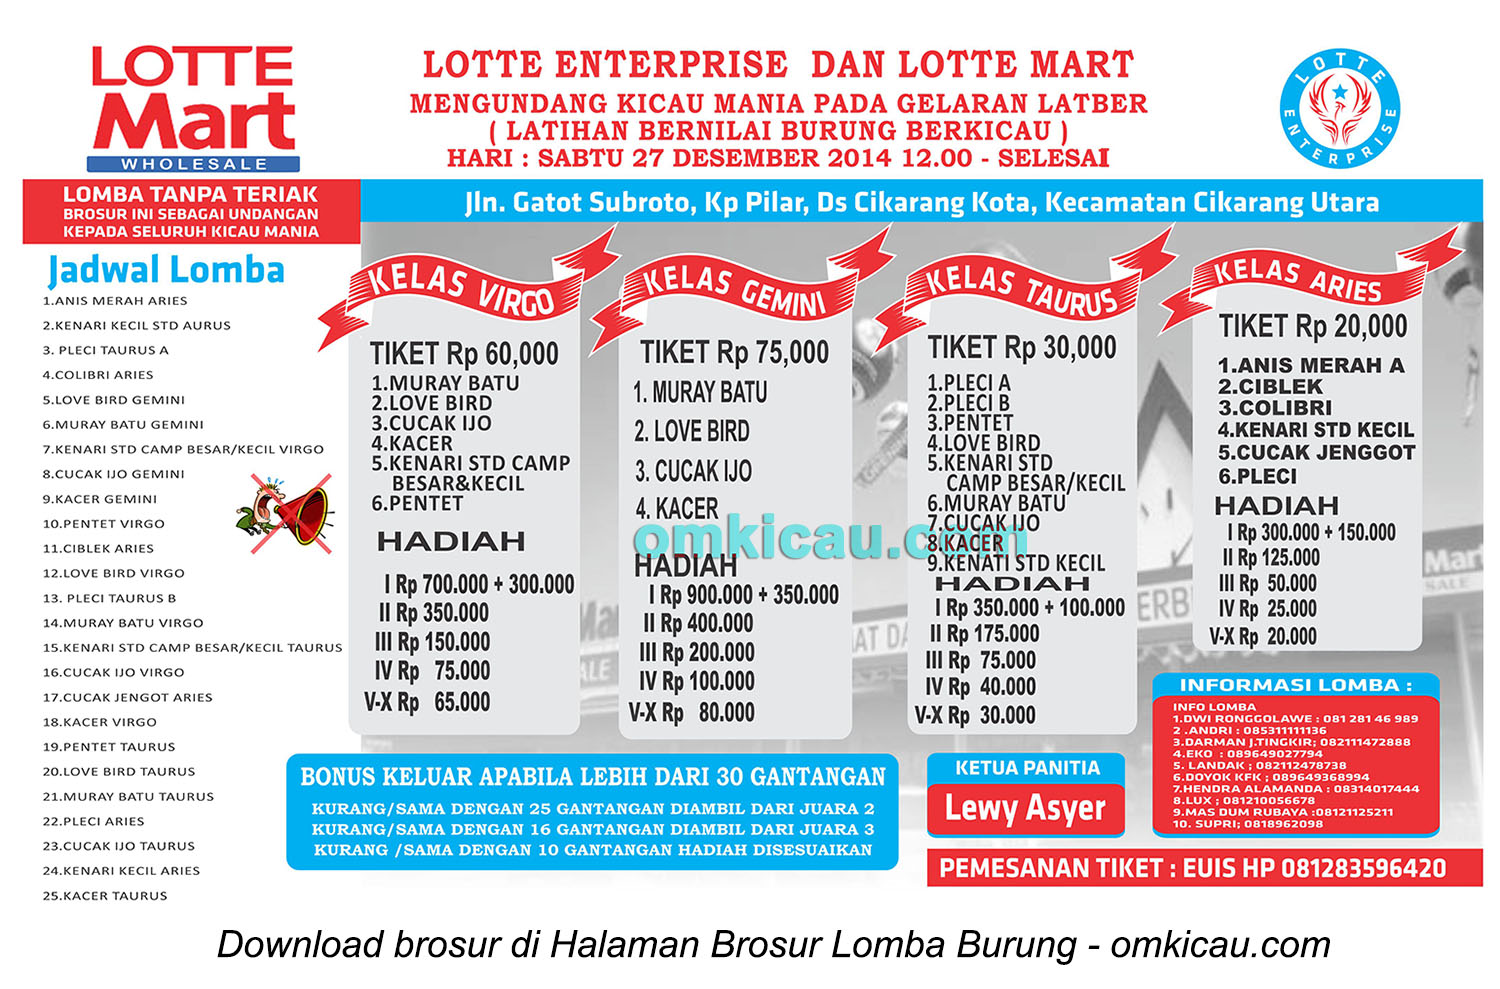 Brosur Latber Lotte Enterprise, Bekasi, 27 Desember 2014